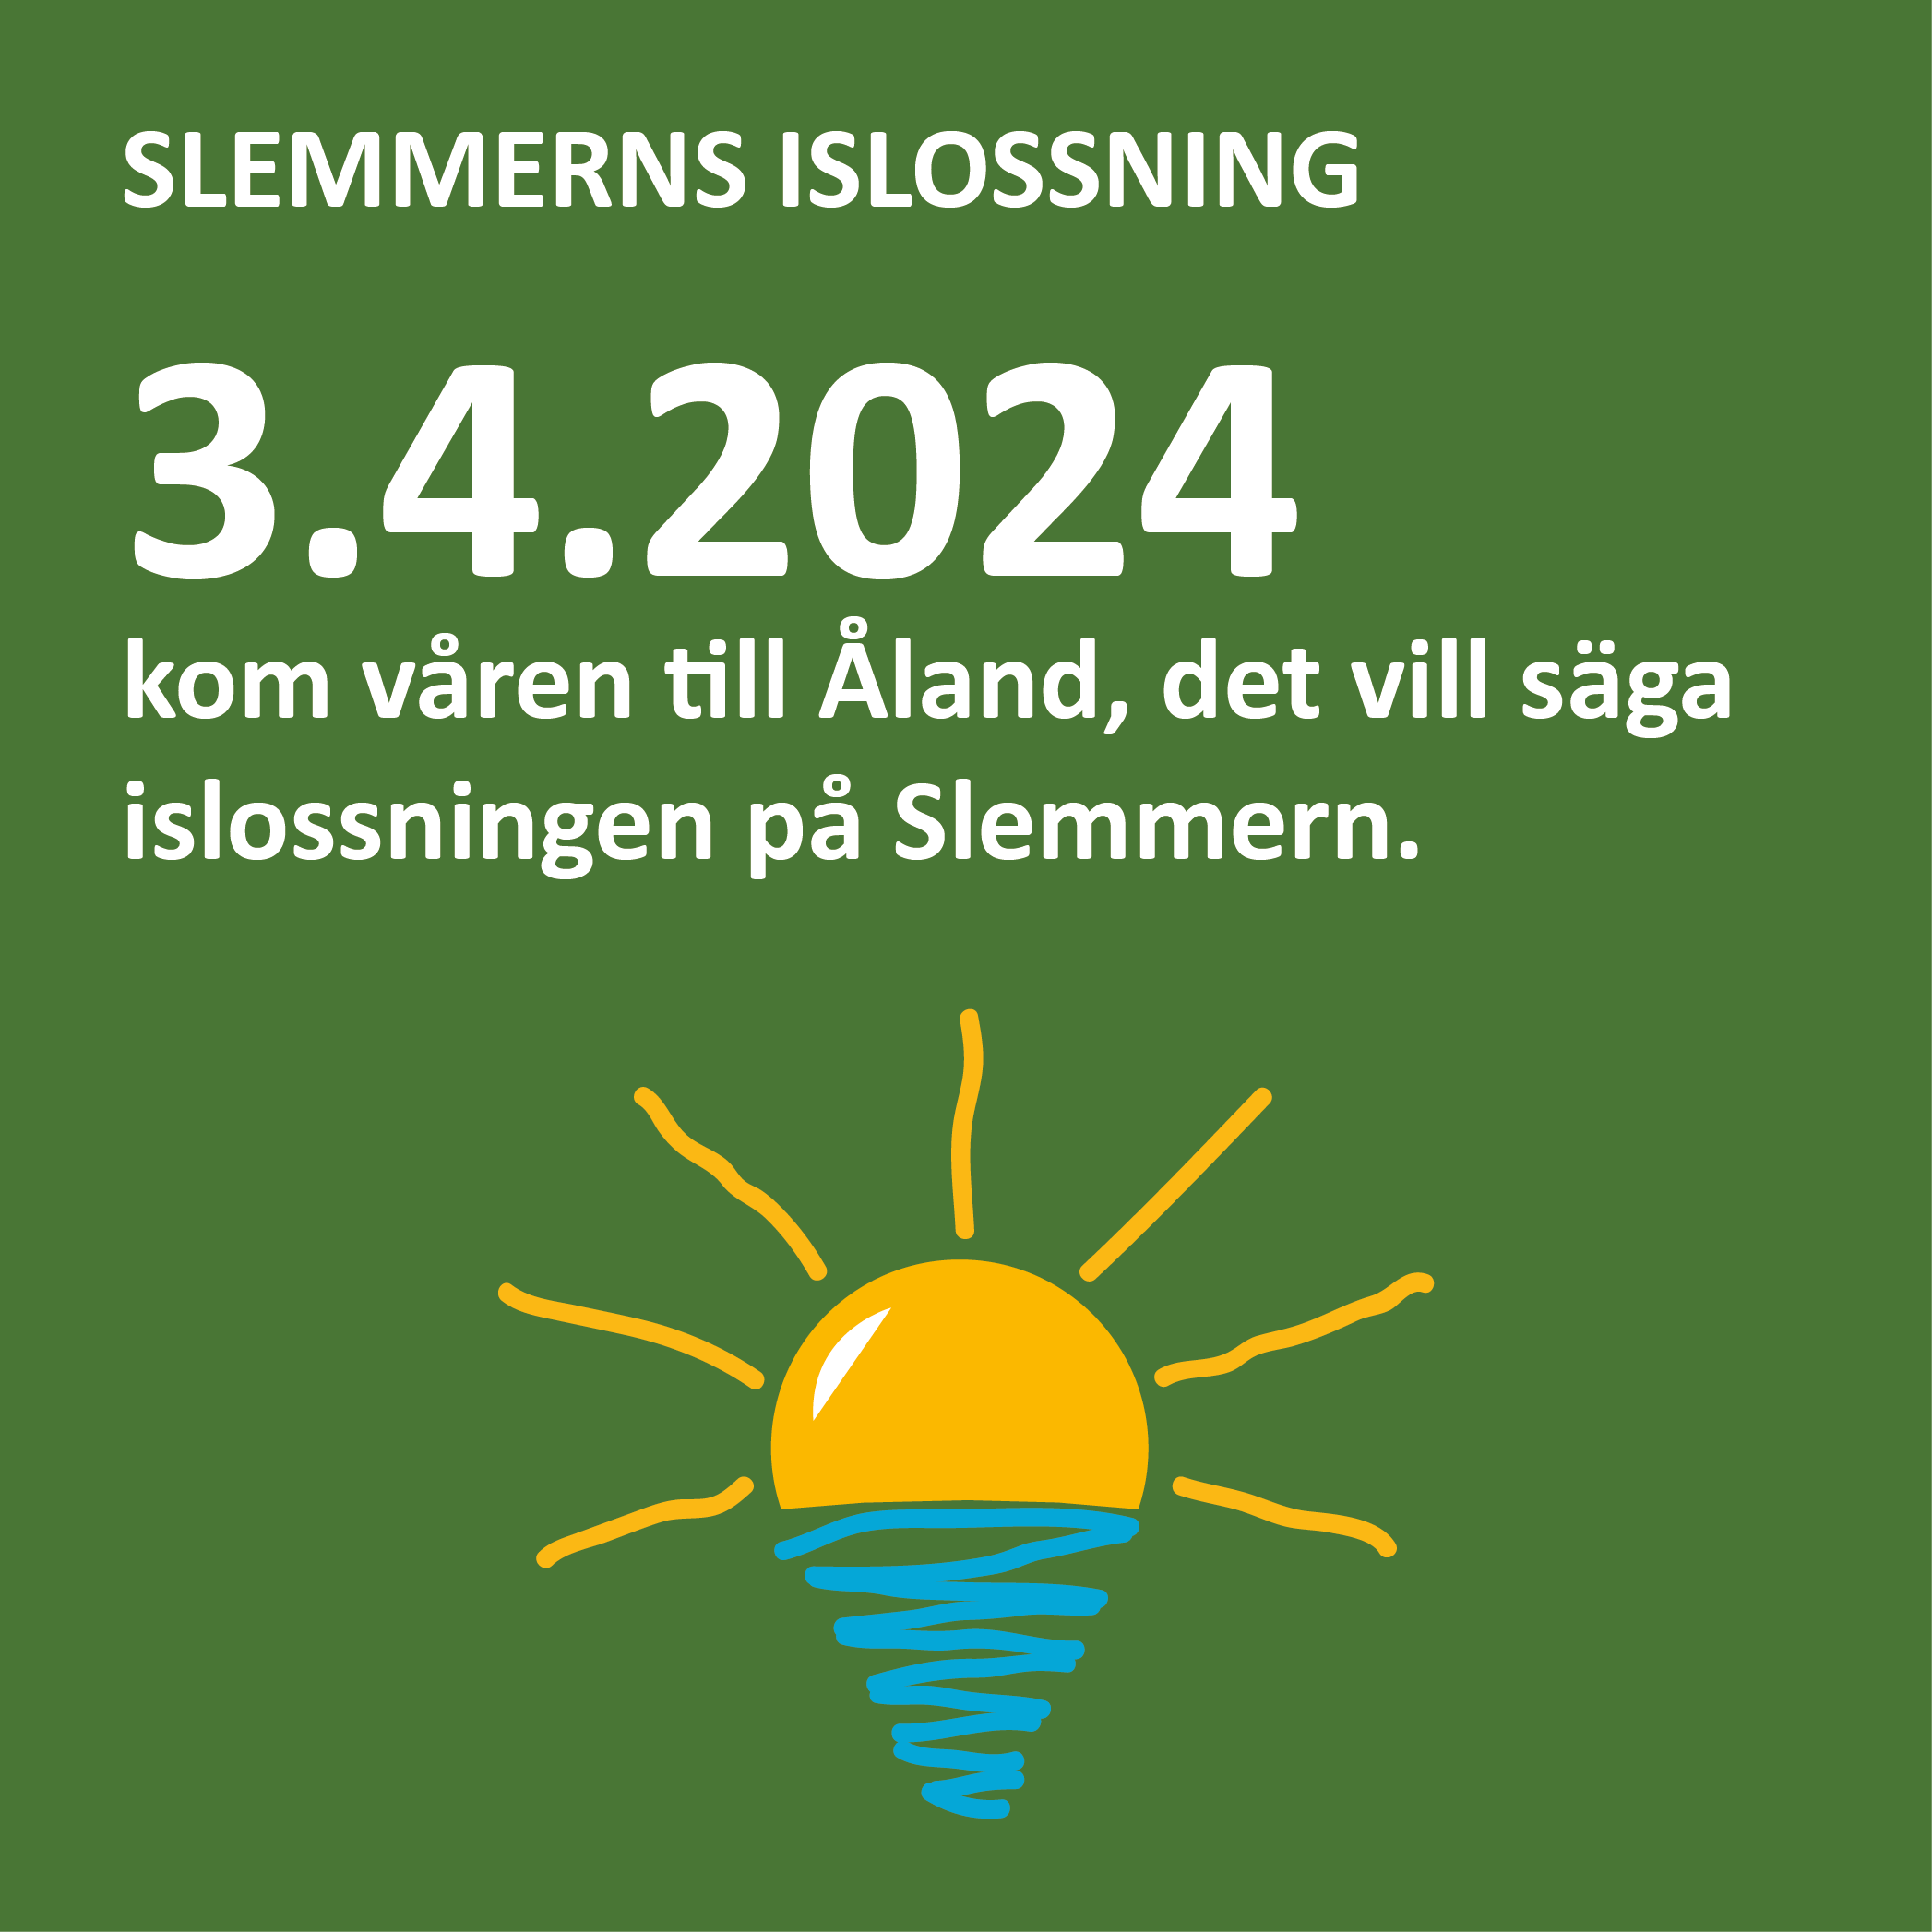 Infografik om Slemmerns islossning på Åland